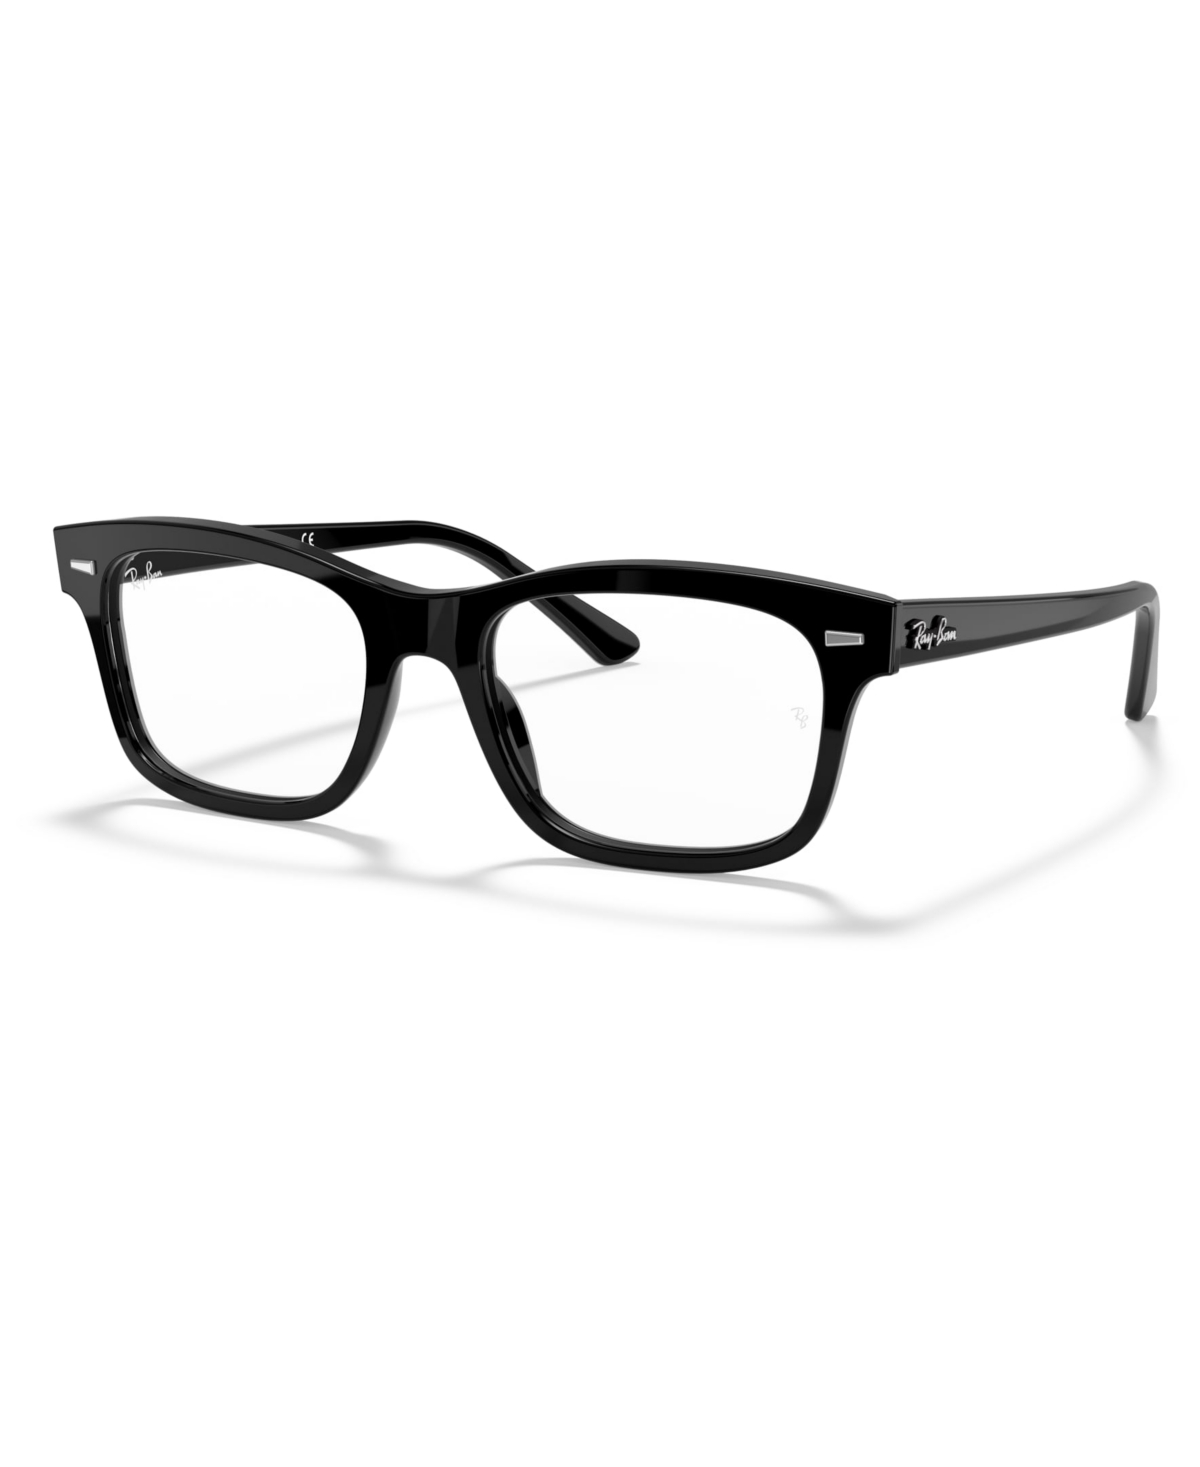 RX5383 Unisex Rectangle Eyeglasses - Black